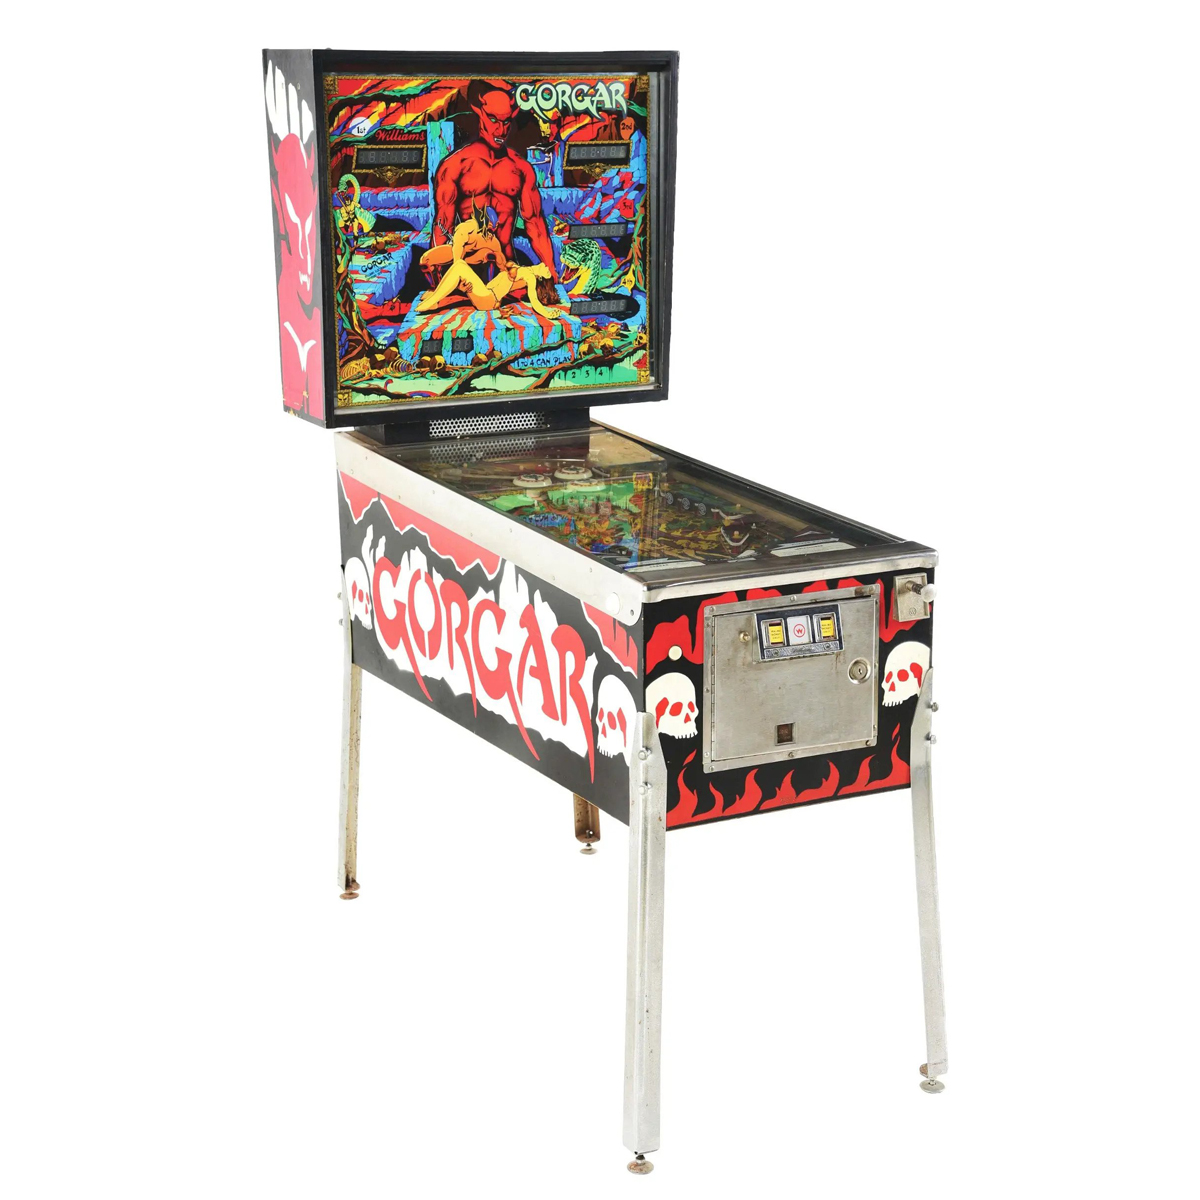 Gorgar Pinball Machine